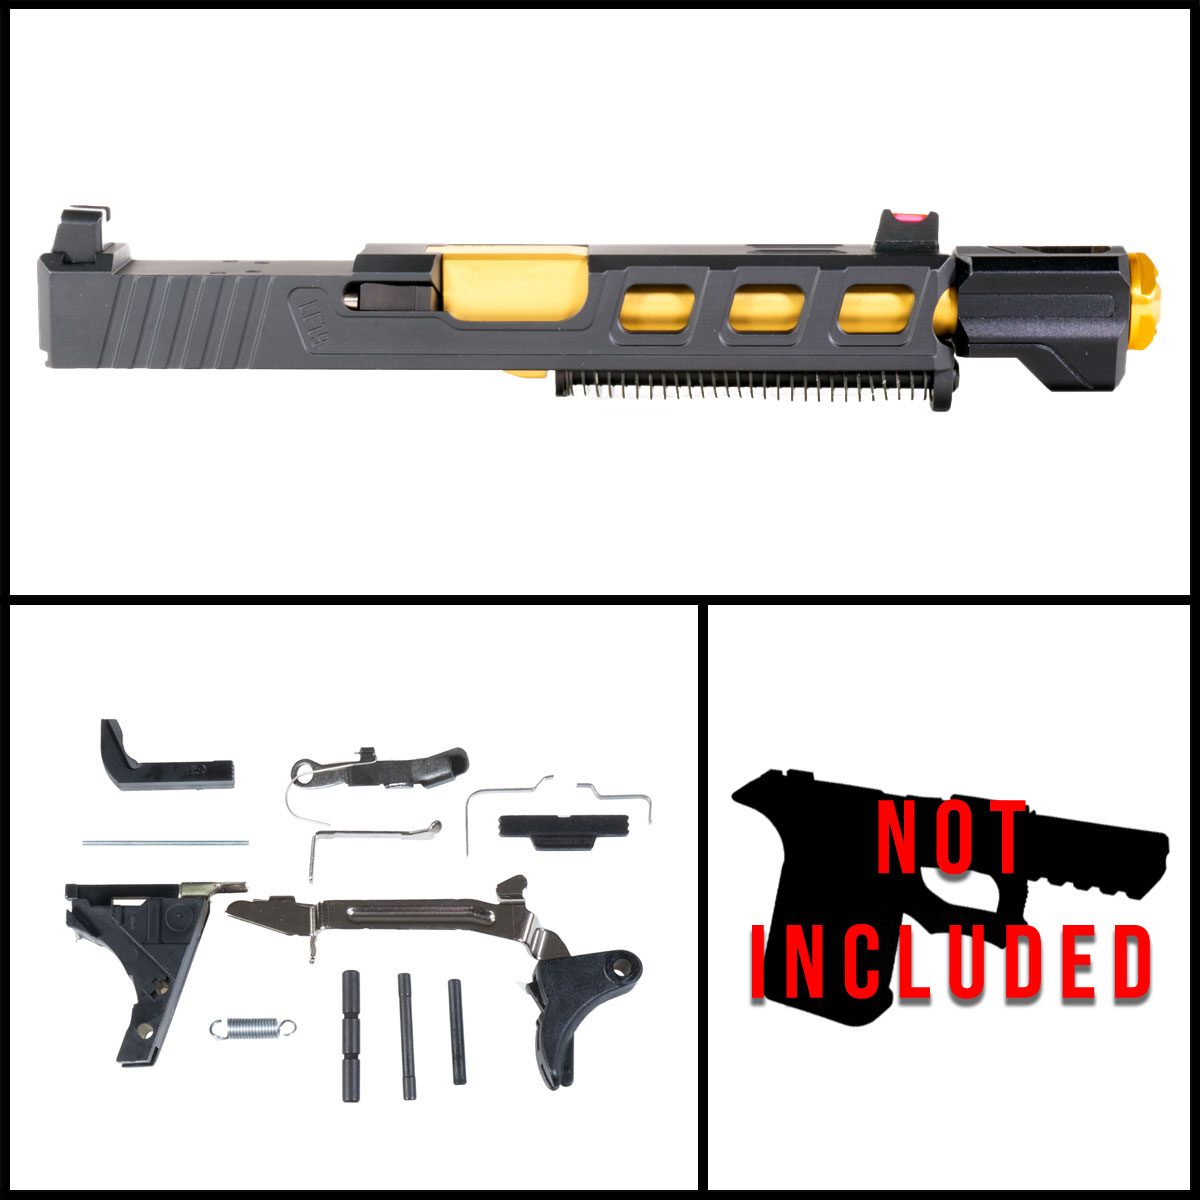 MMC 'Peng w/ Tyrant Designs Compensator' 9mm Full Pistol Build Kit (Everything Minus Frame) - Glock 19 Gen 1-3 Compatible